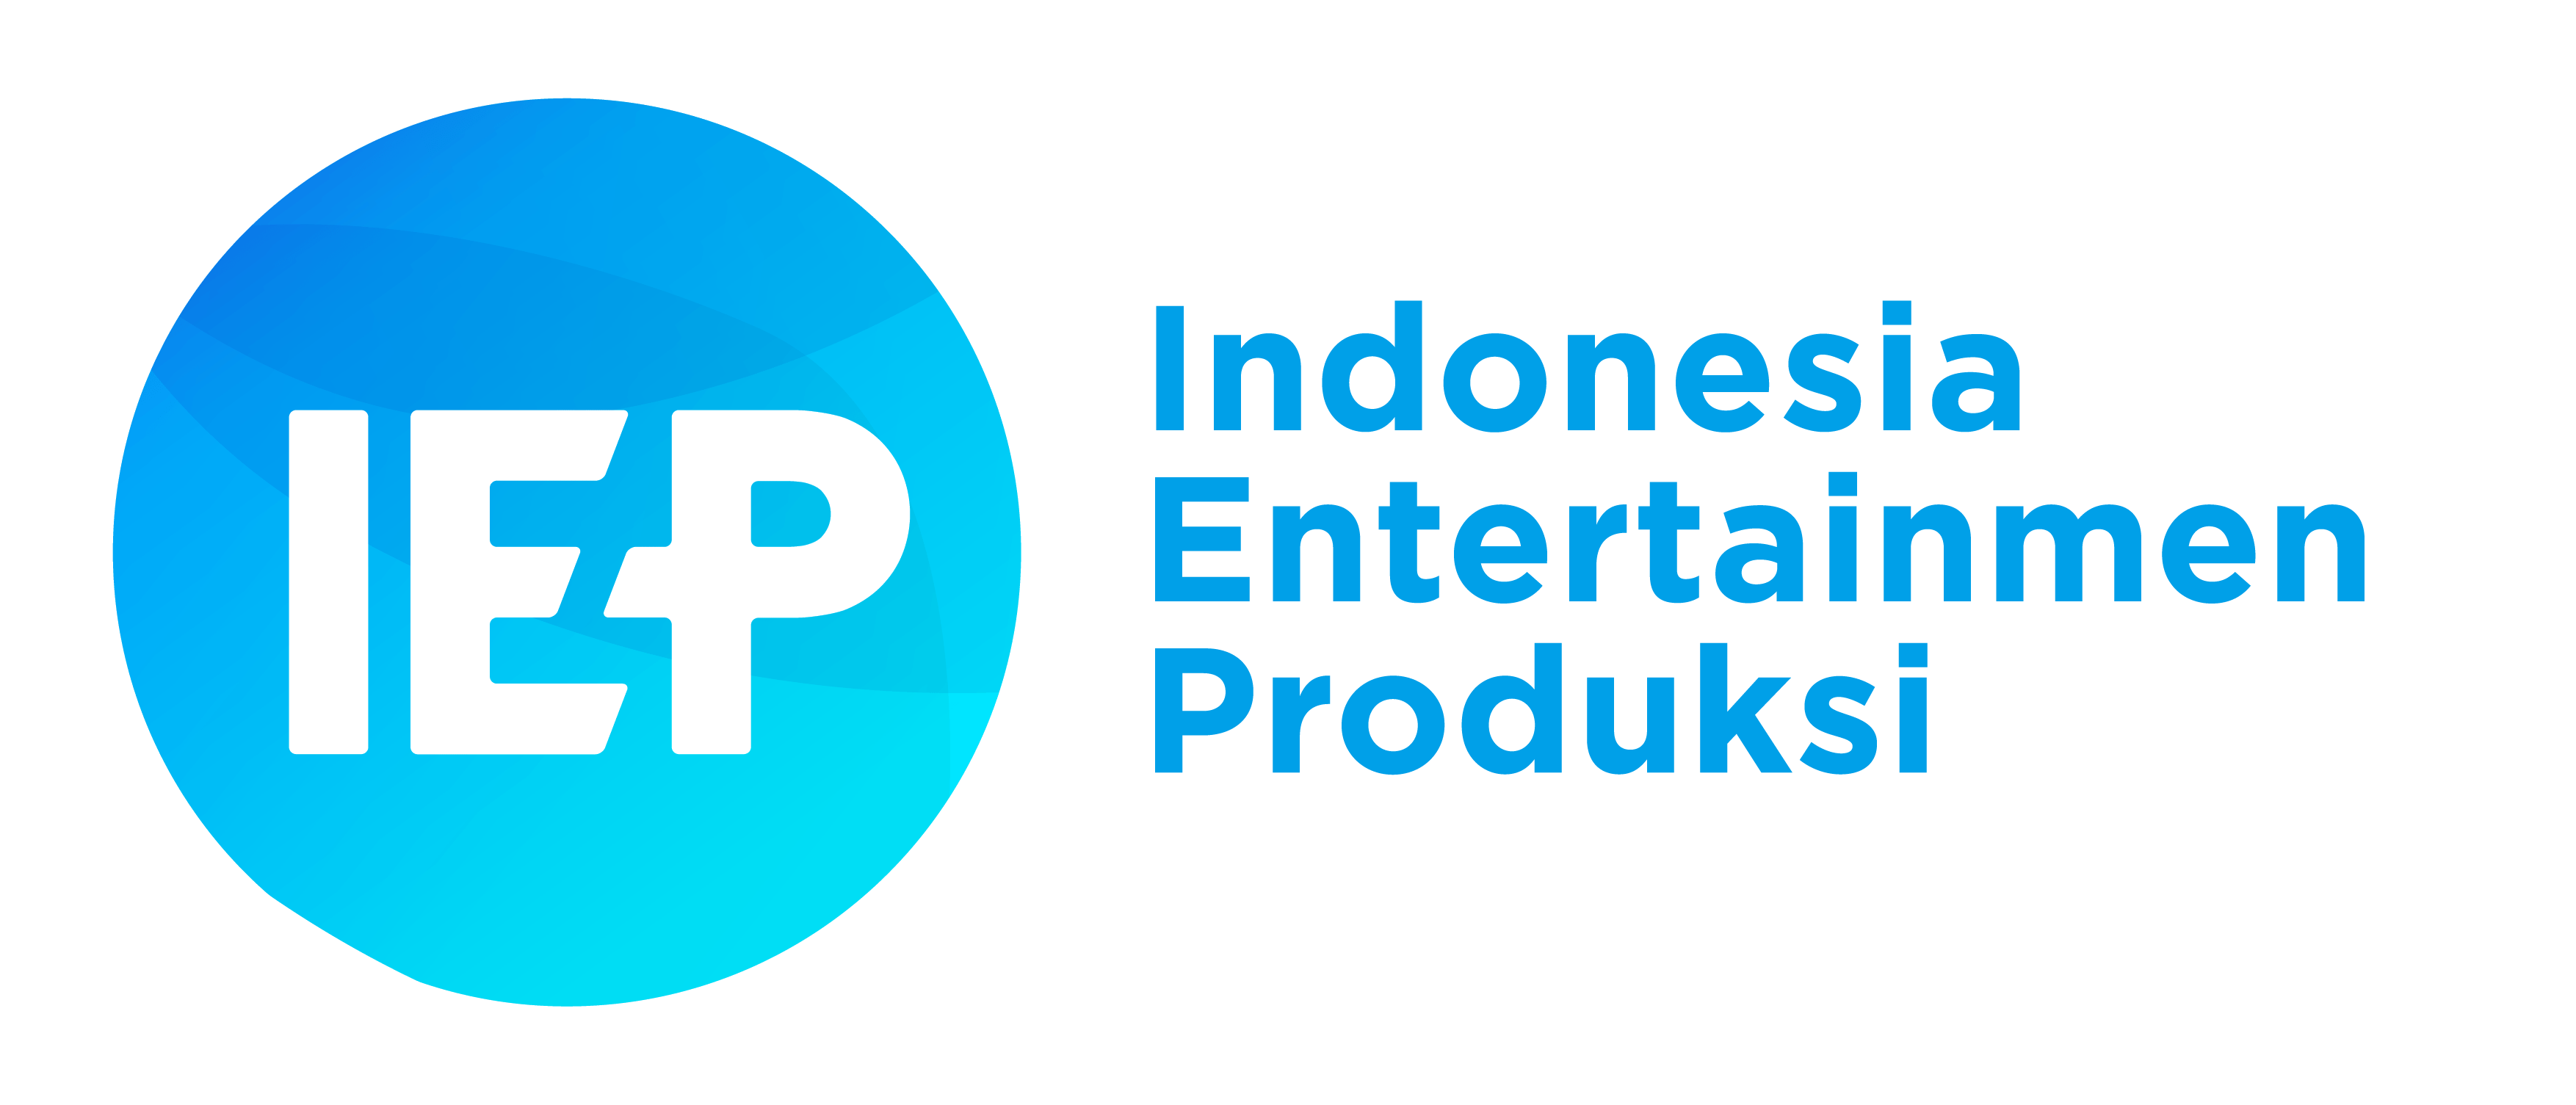 IEP Logo - Indonesia Entertainmen Produksi bahasa Indonesia